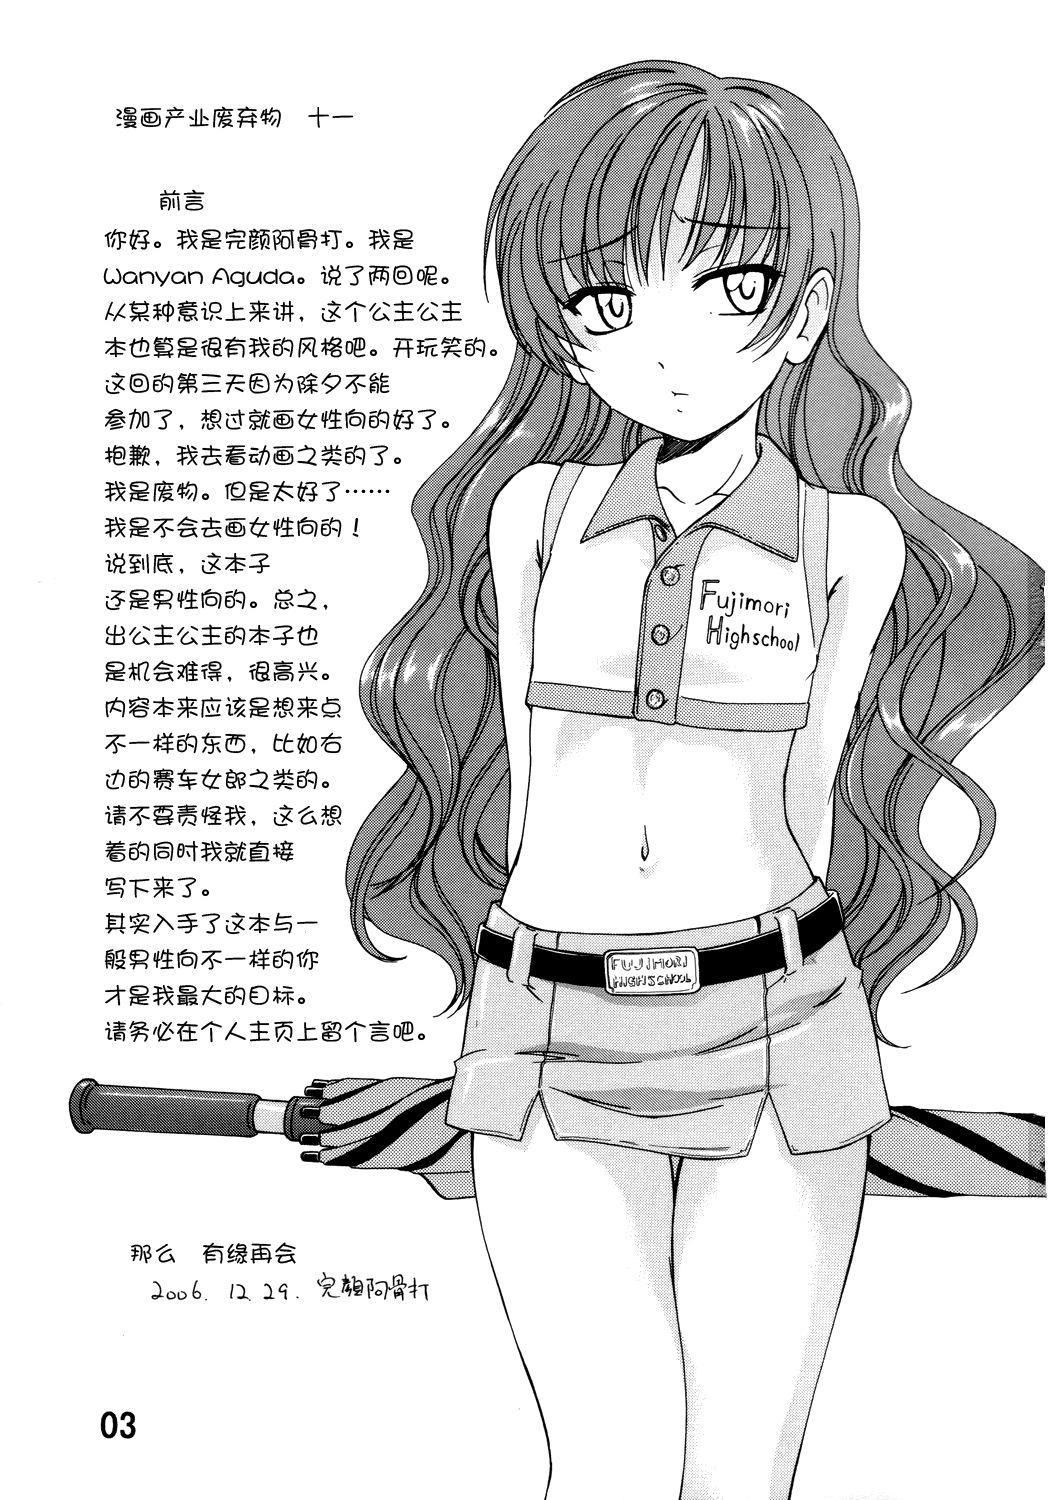 Love Manga Sangyou Haikibutsu 11 - Comic Industrial Wastes 11 - Princess princess Teenager - Page 2